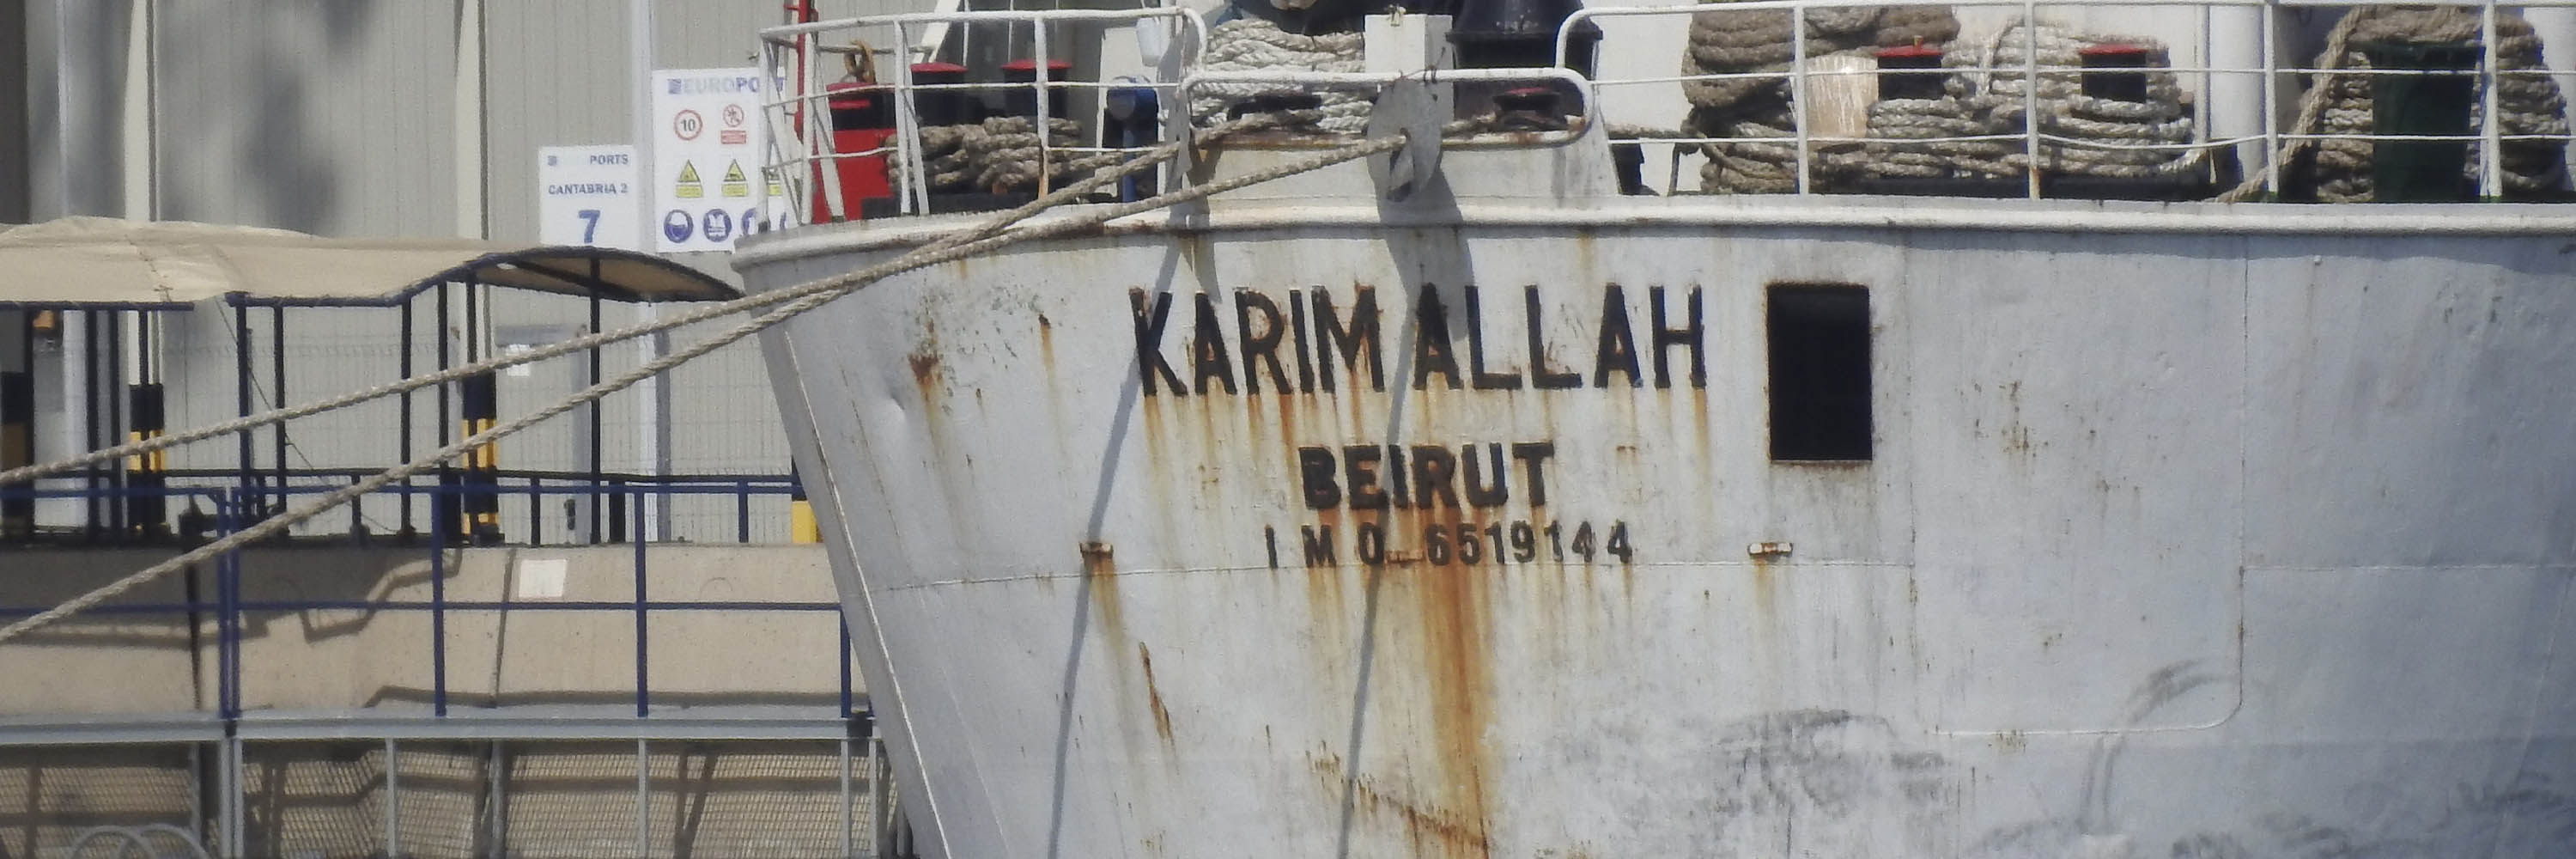 Karim Allah nave